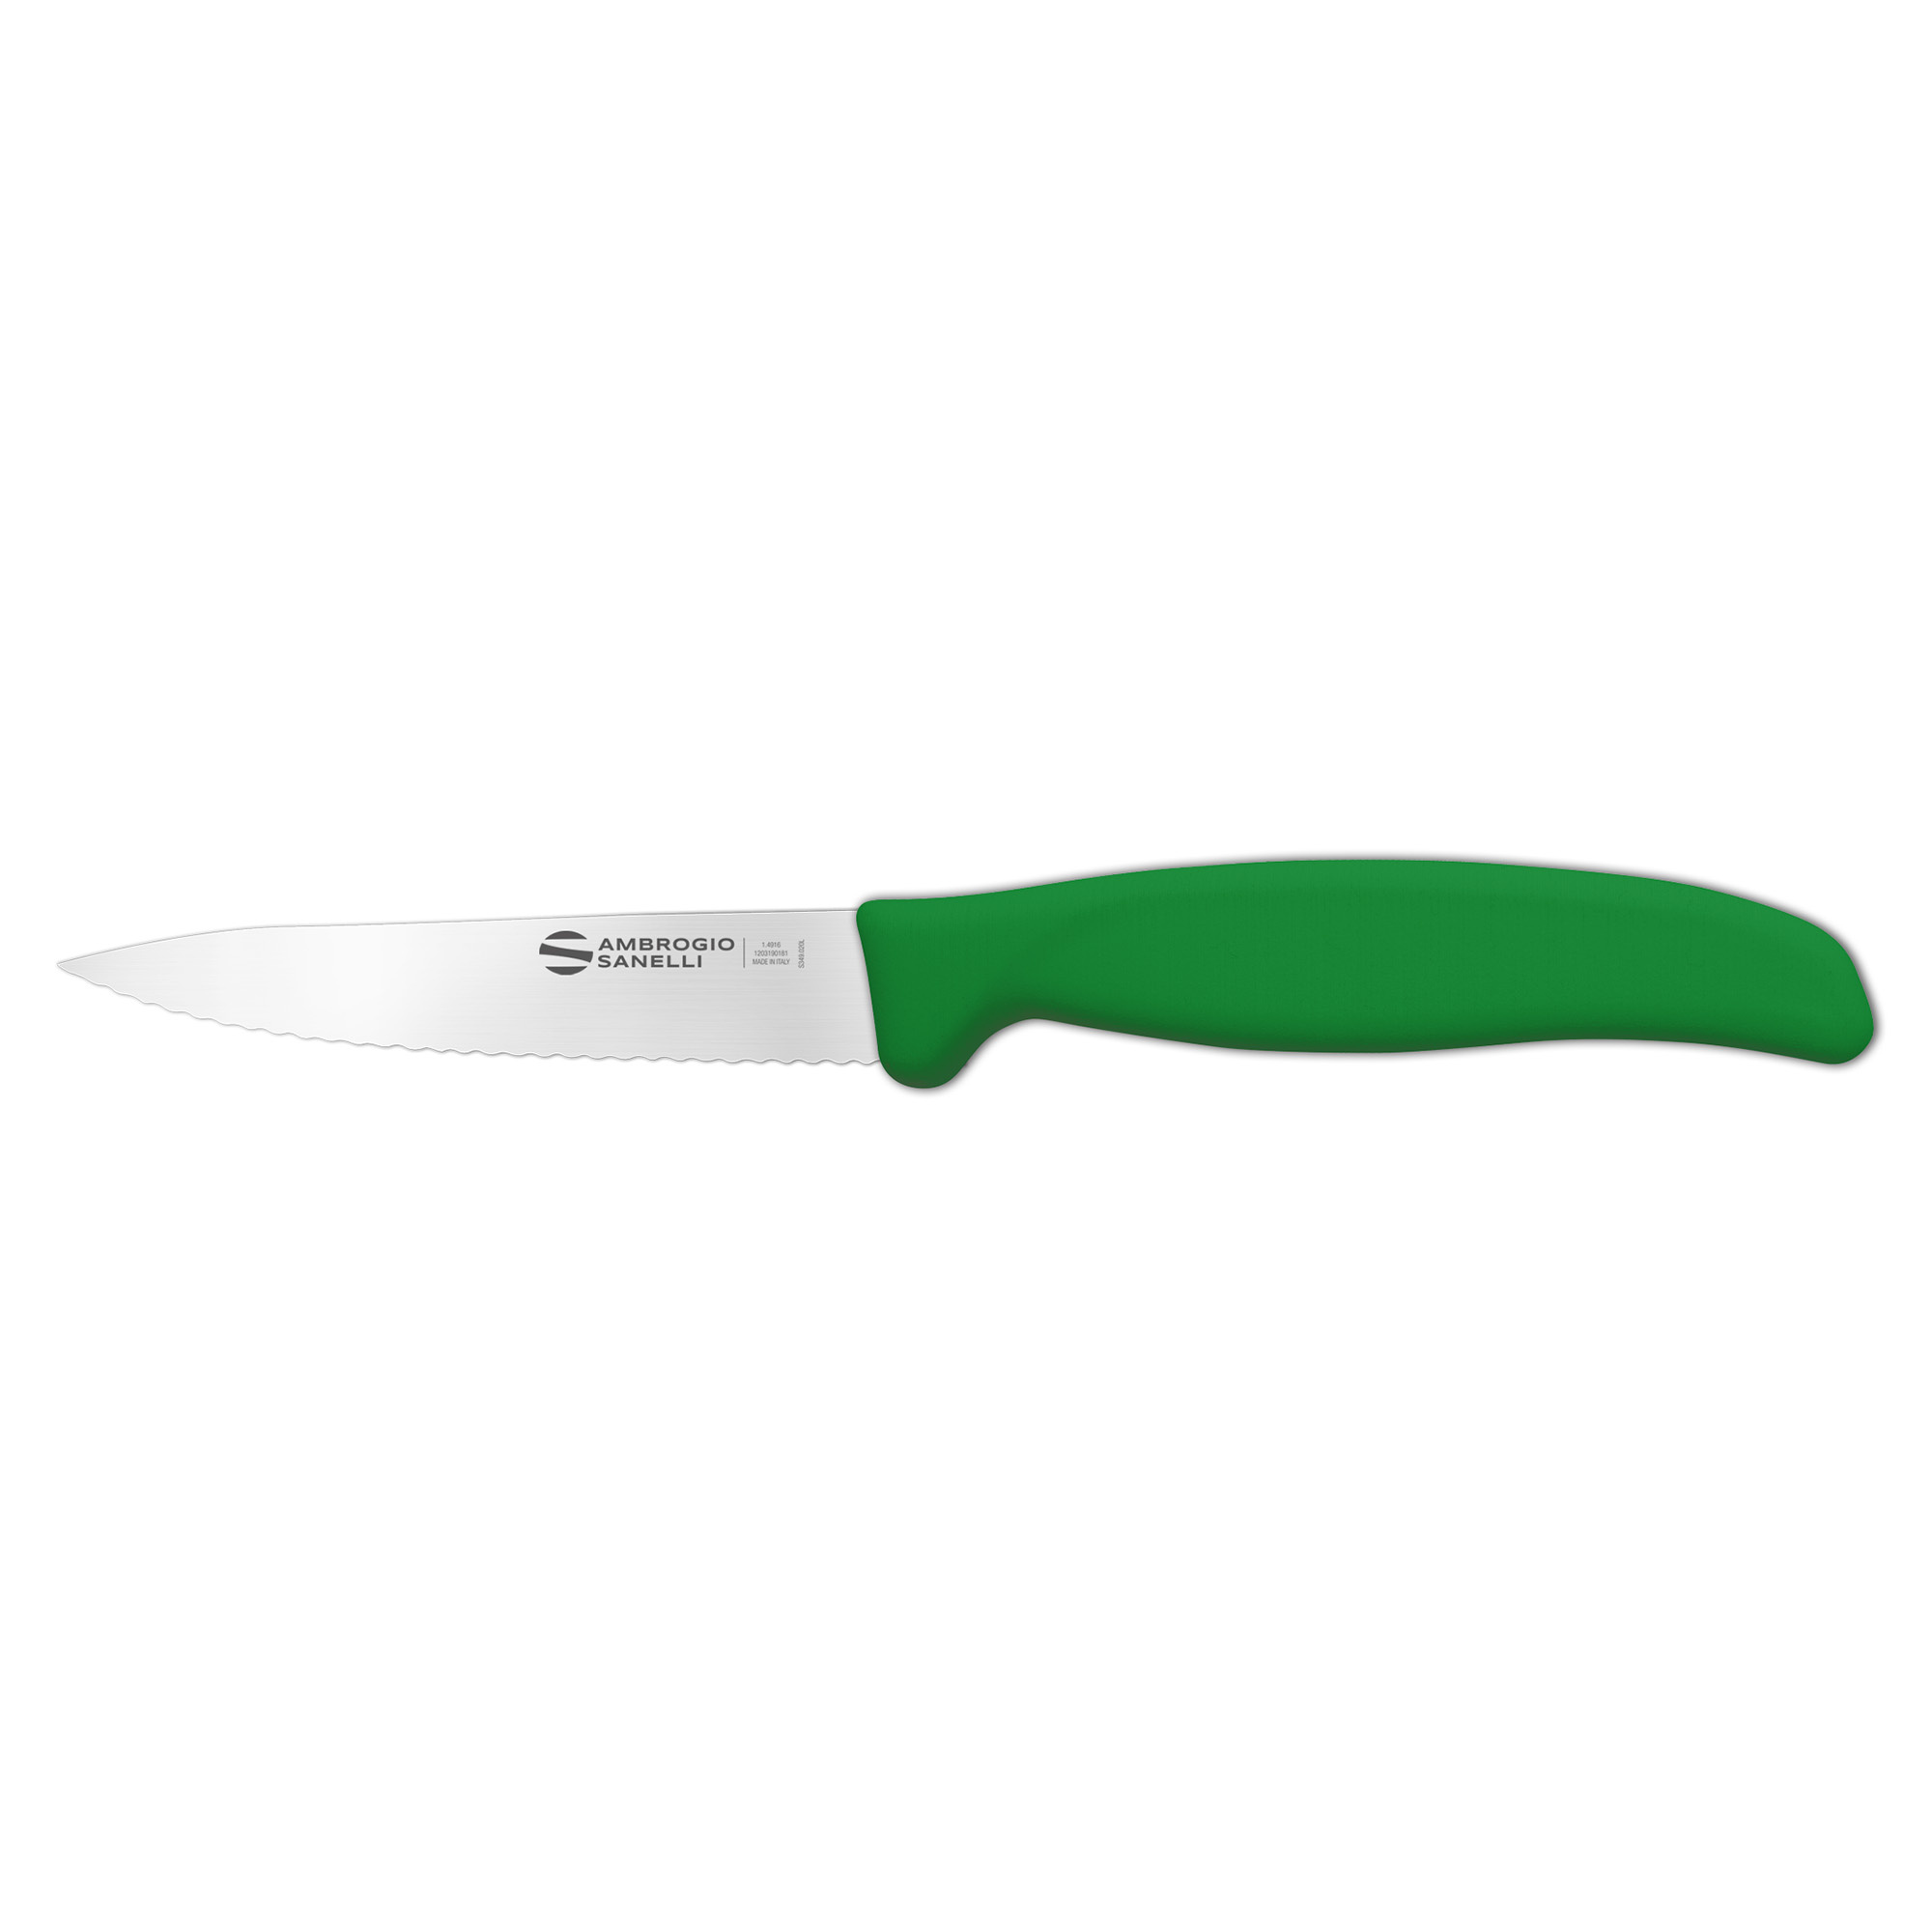 Ambrogio Sanelli Serrated paring knife 9cm green - DEKSELS!